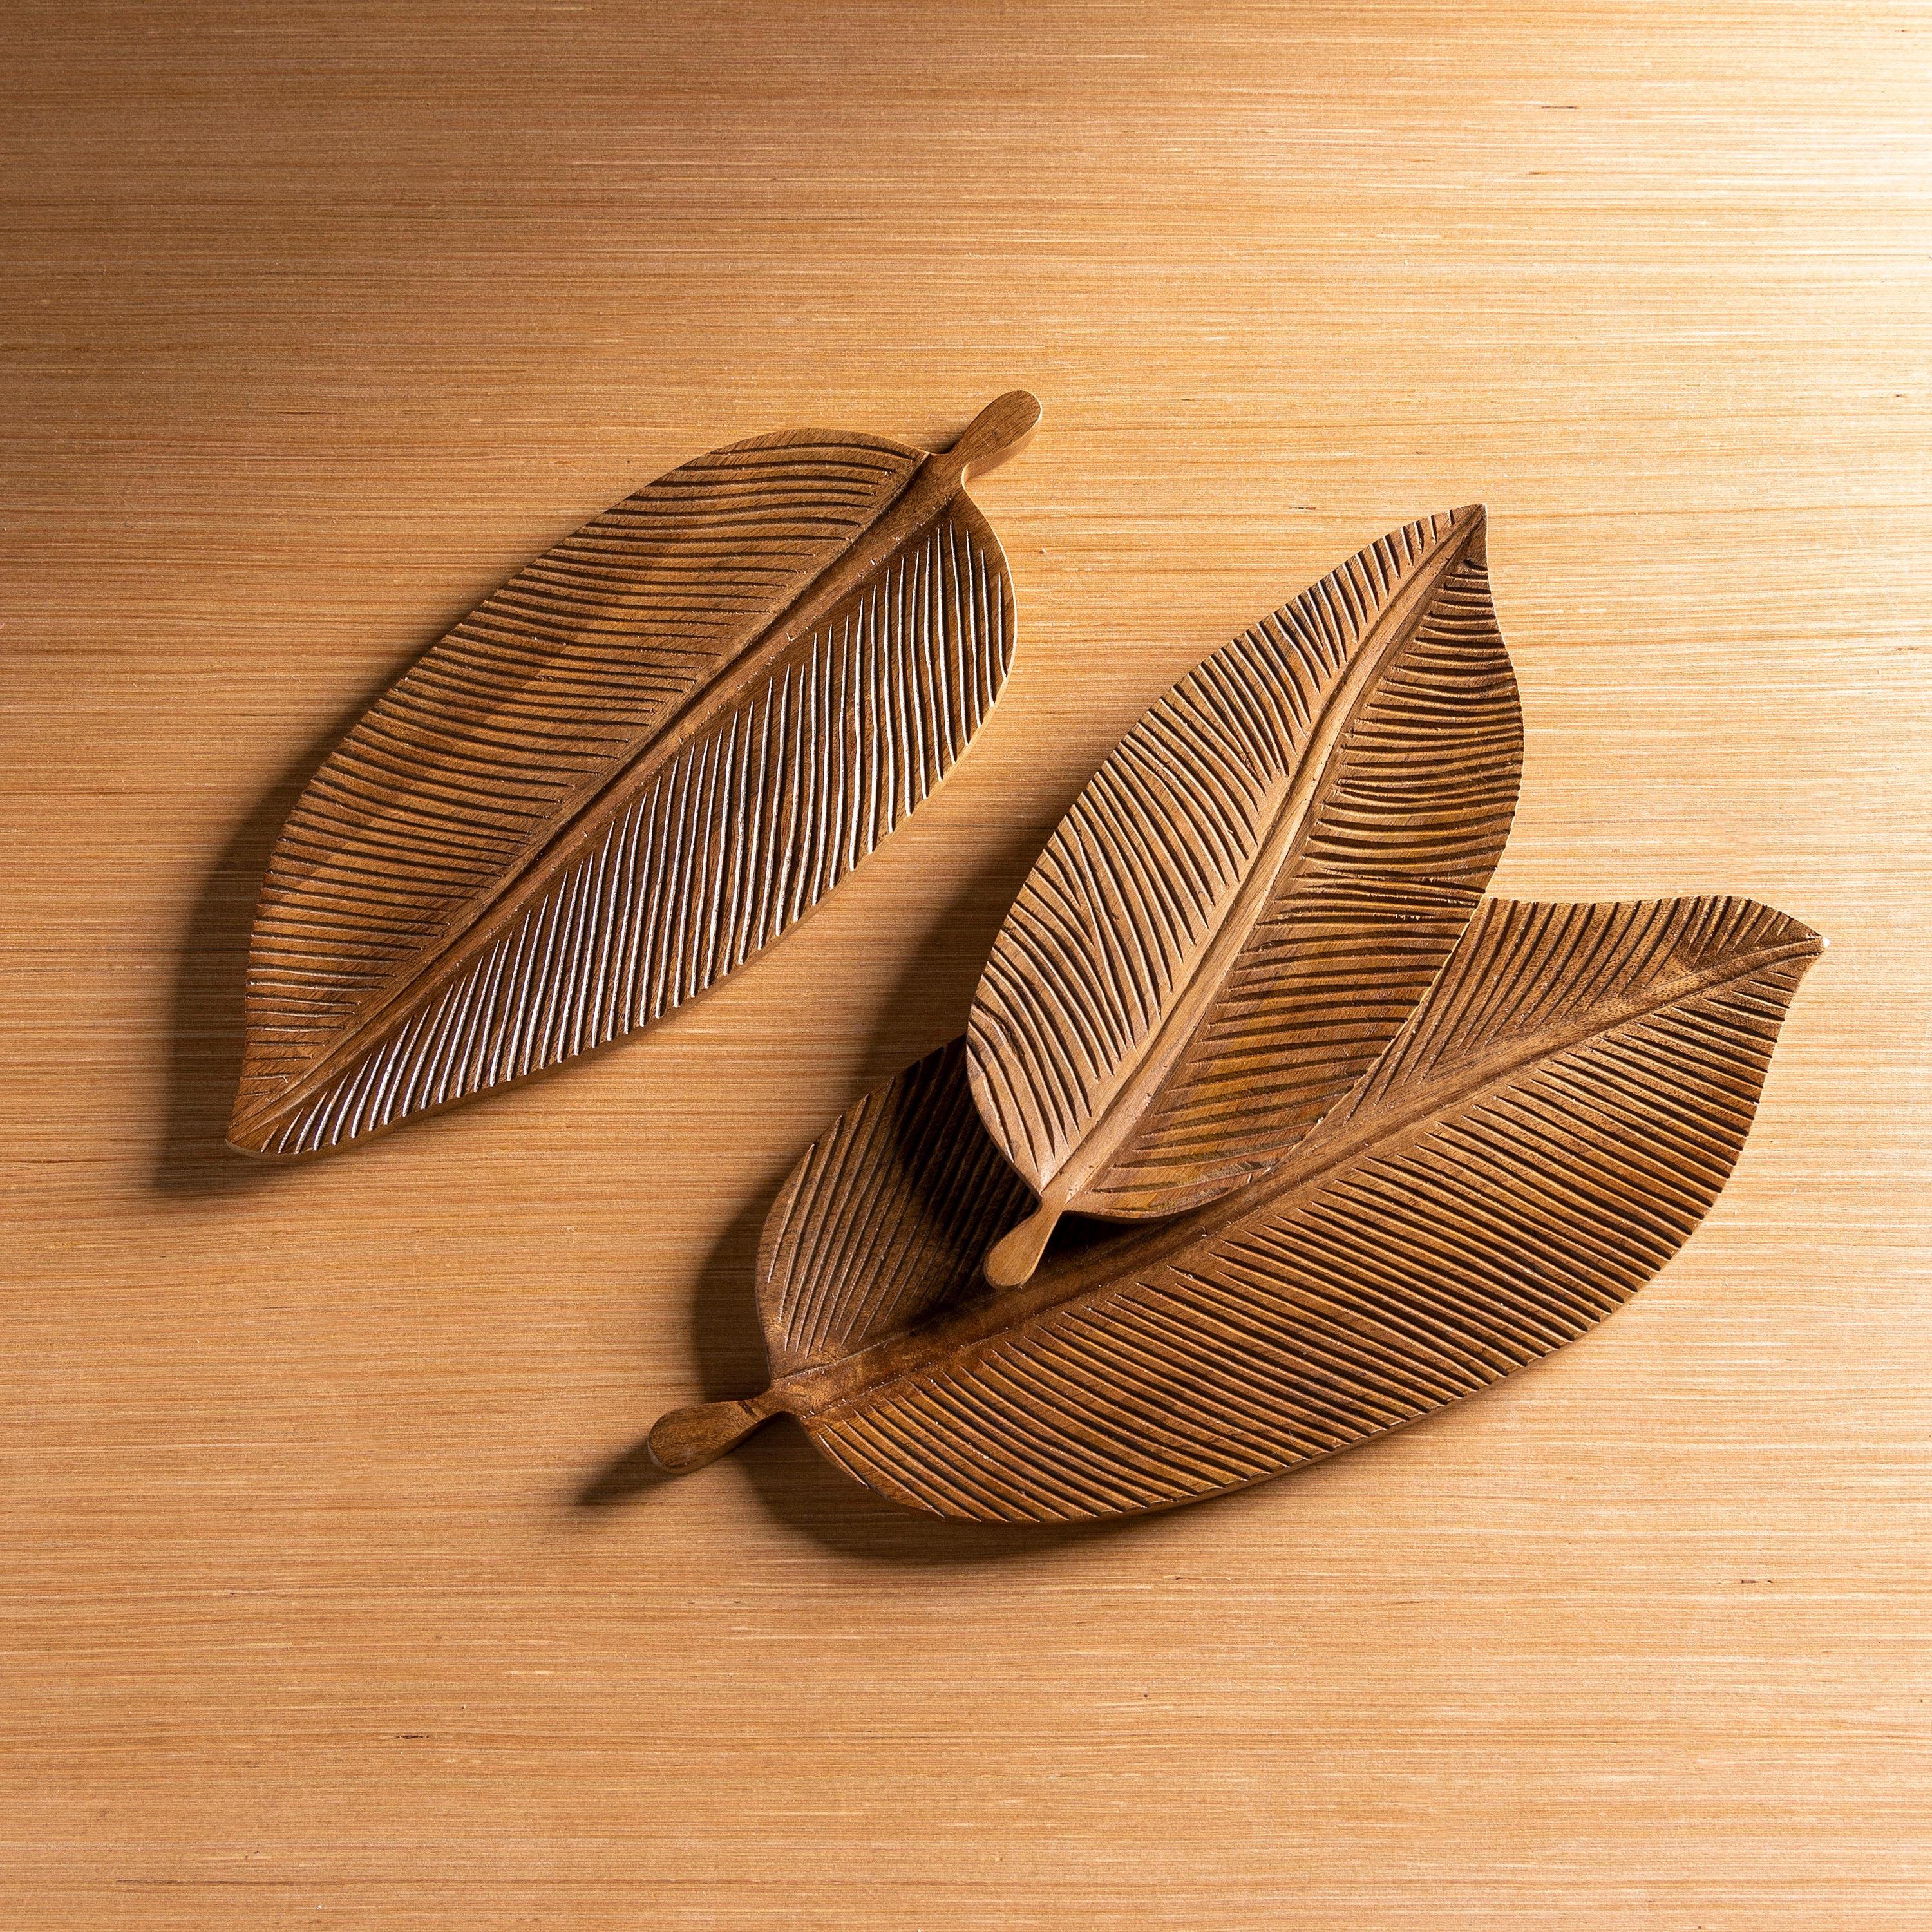 Mango Wood Leaf-Shaped Serving Plates, Set of 3